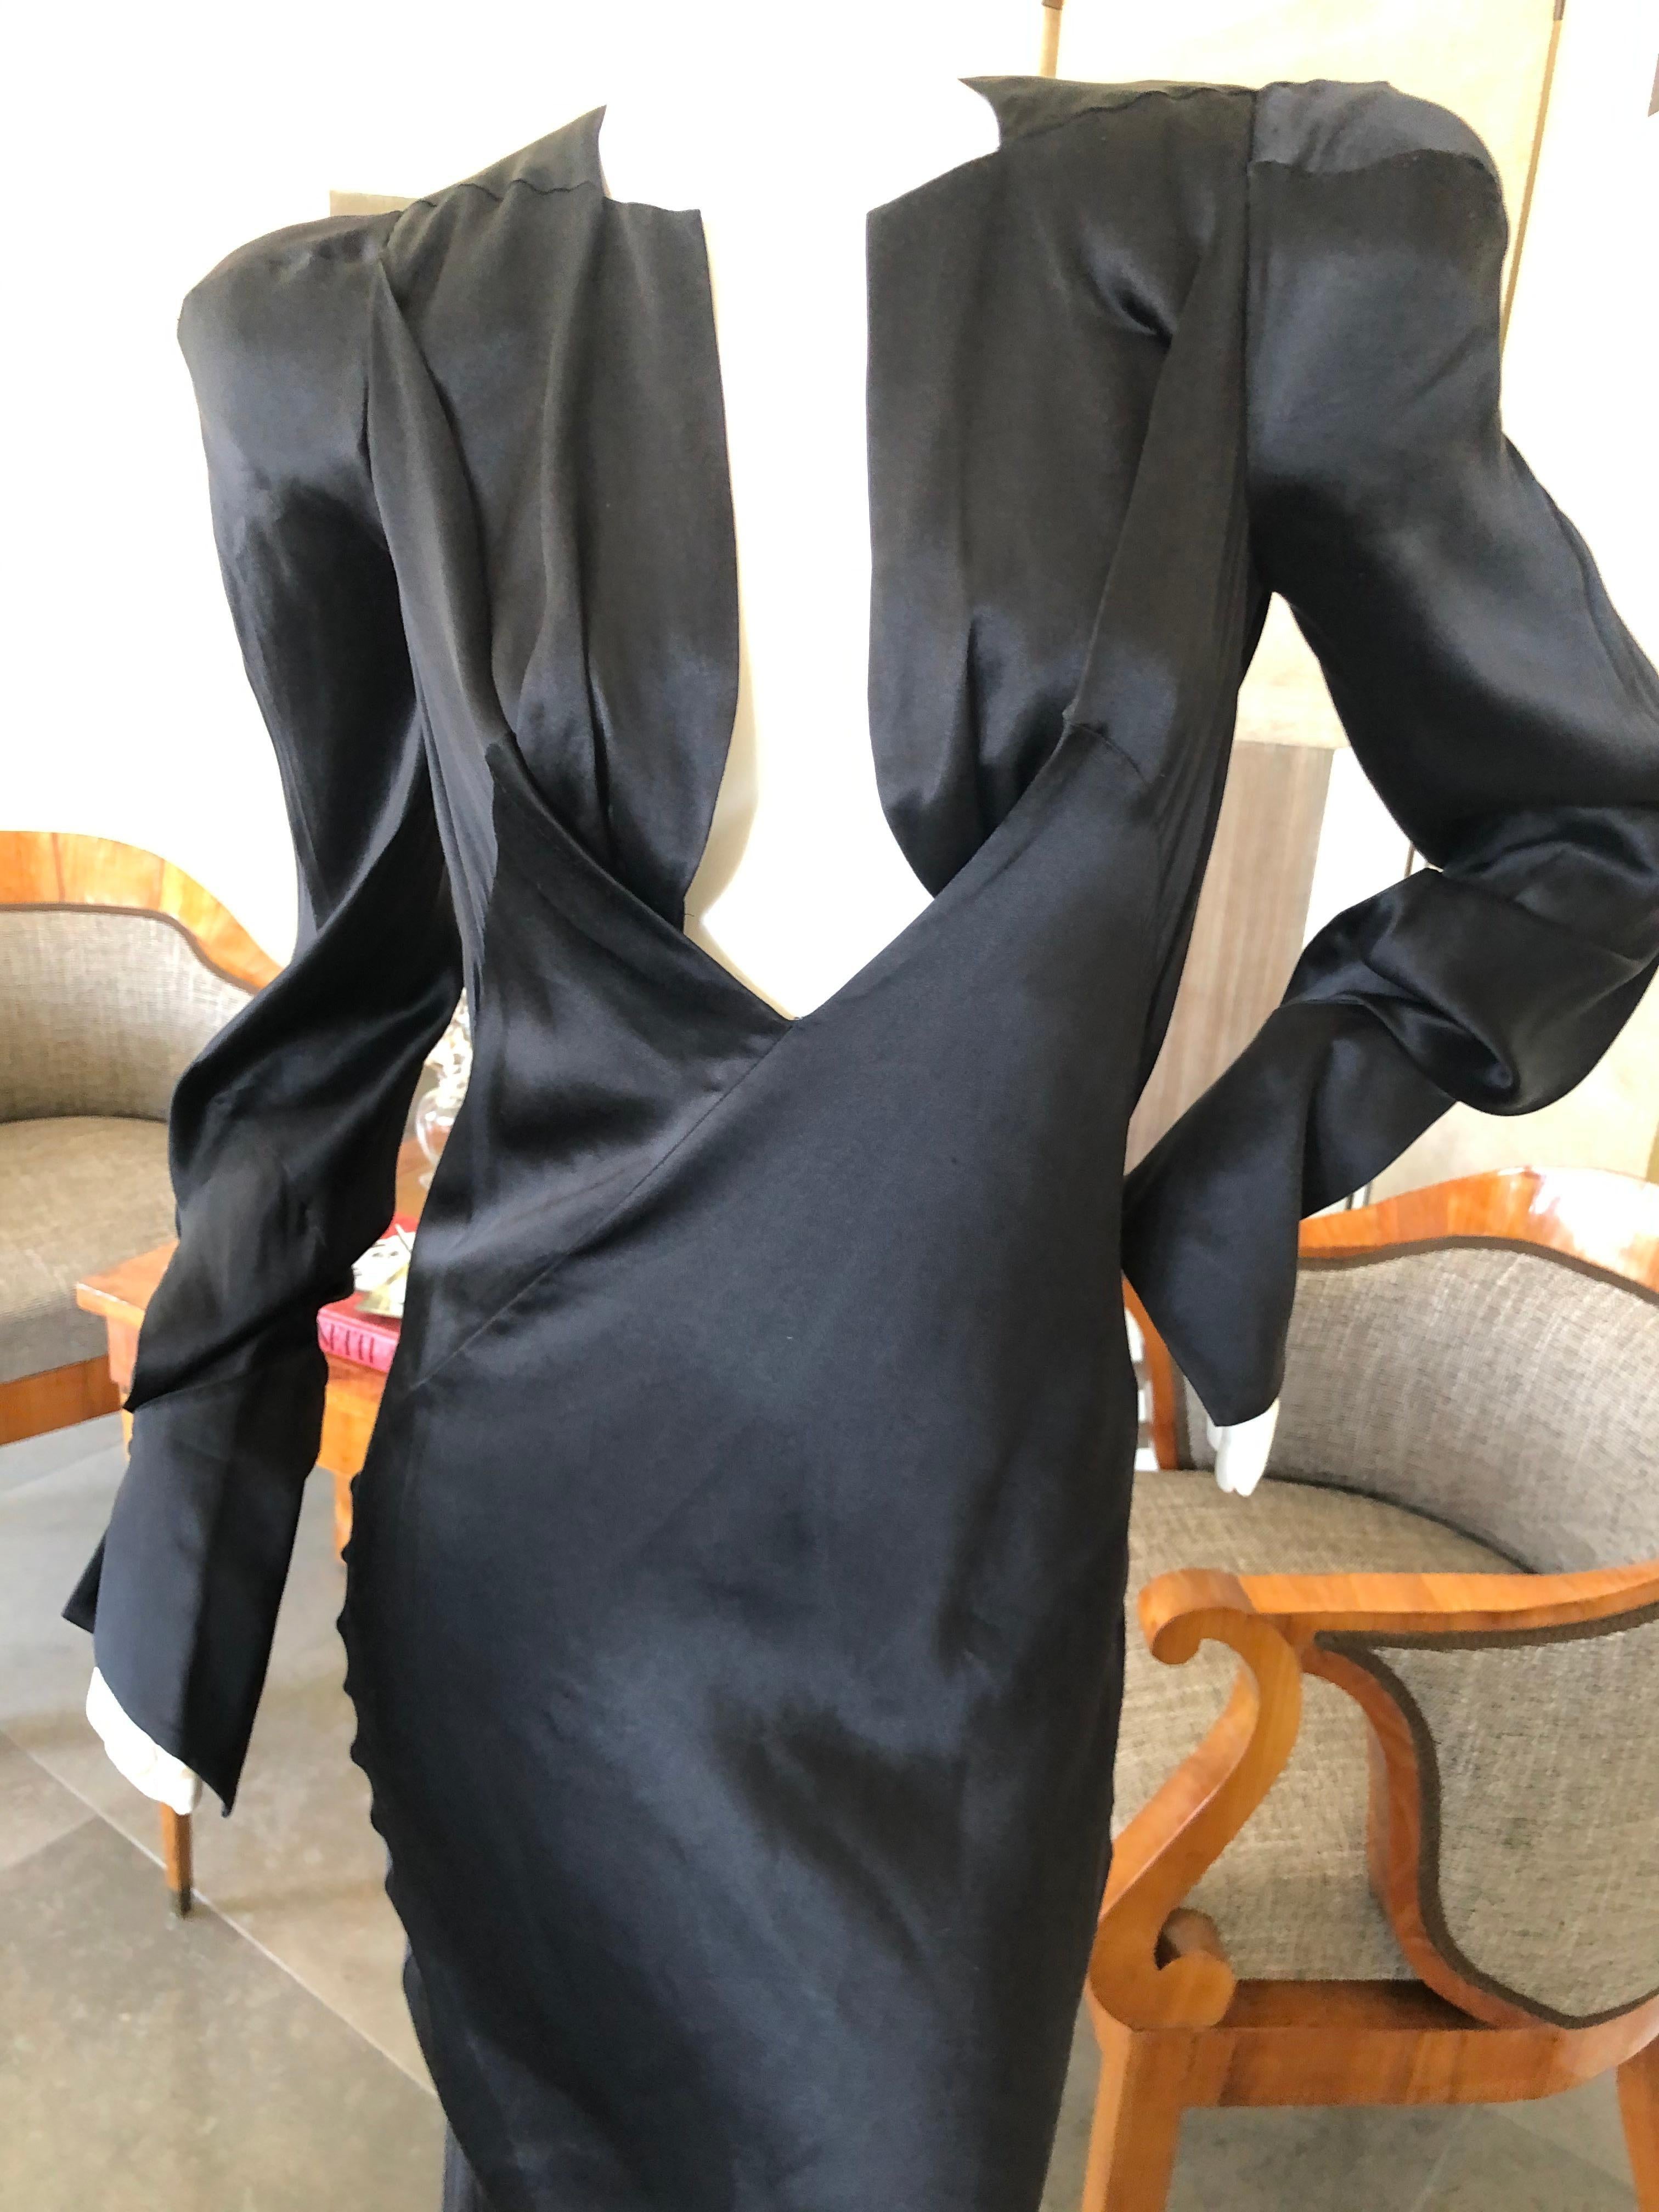 Olivier Theyskins Bias Cut Black Silk Evening Dress w Bold Shoulders and Deep Vee.
Sold at Bergdorf Goodman 2019
 Size 40 
 Bust 36